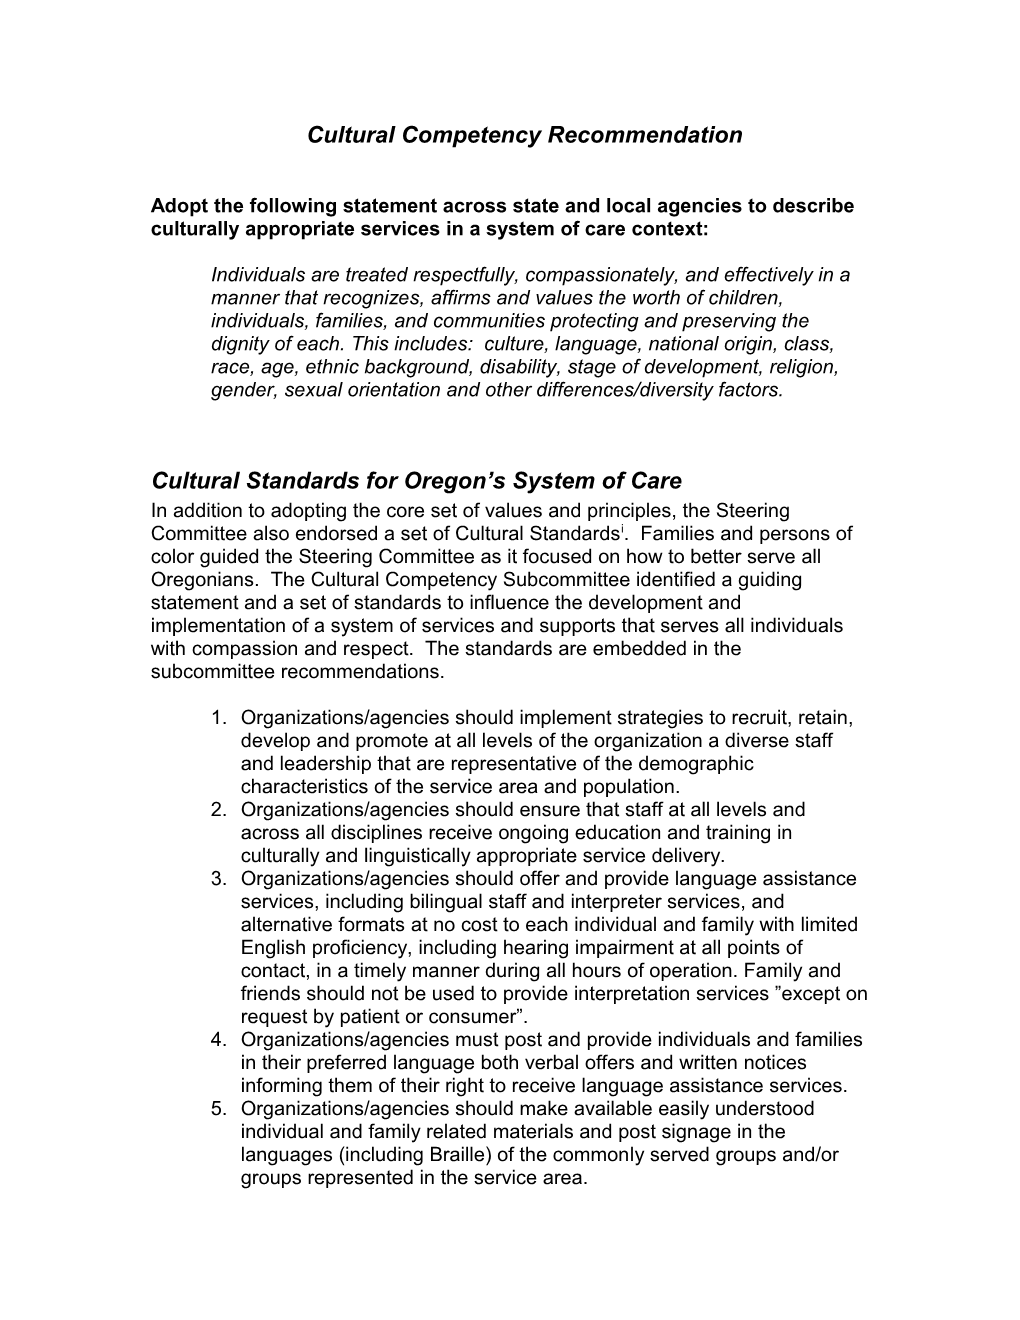 Cultural Standards for Oregon S System of Care